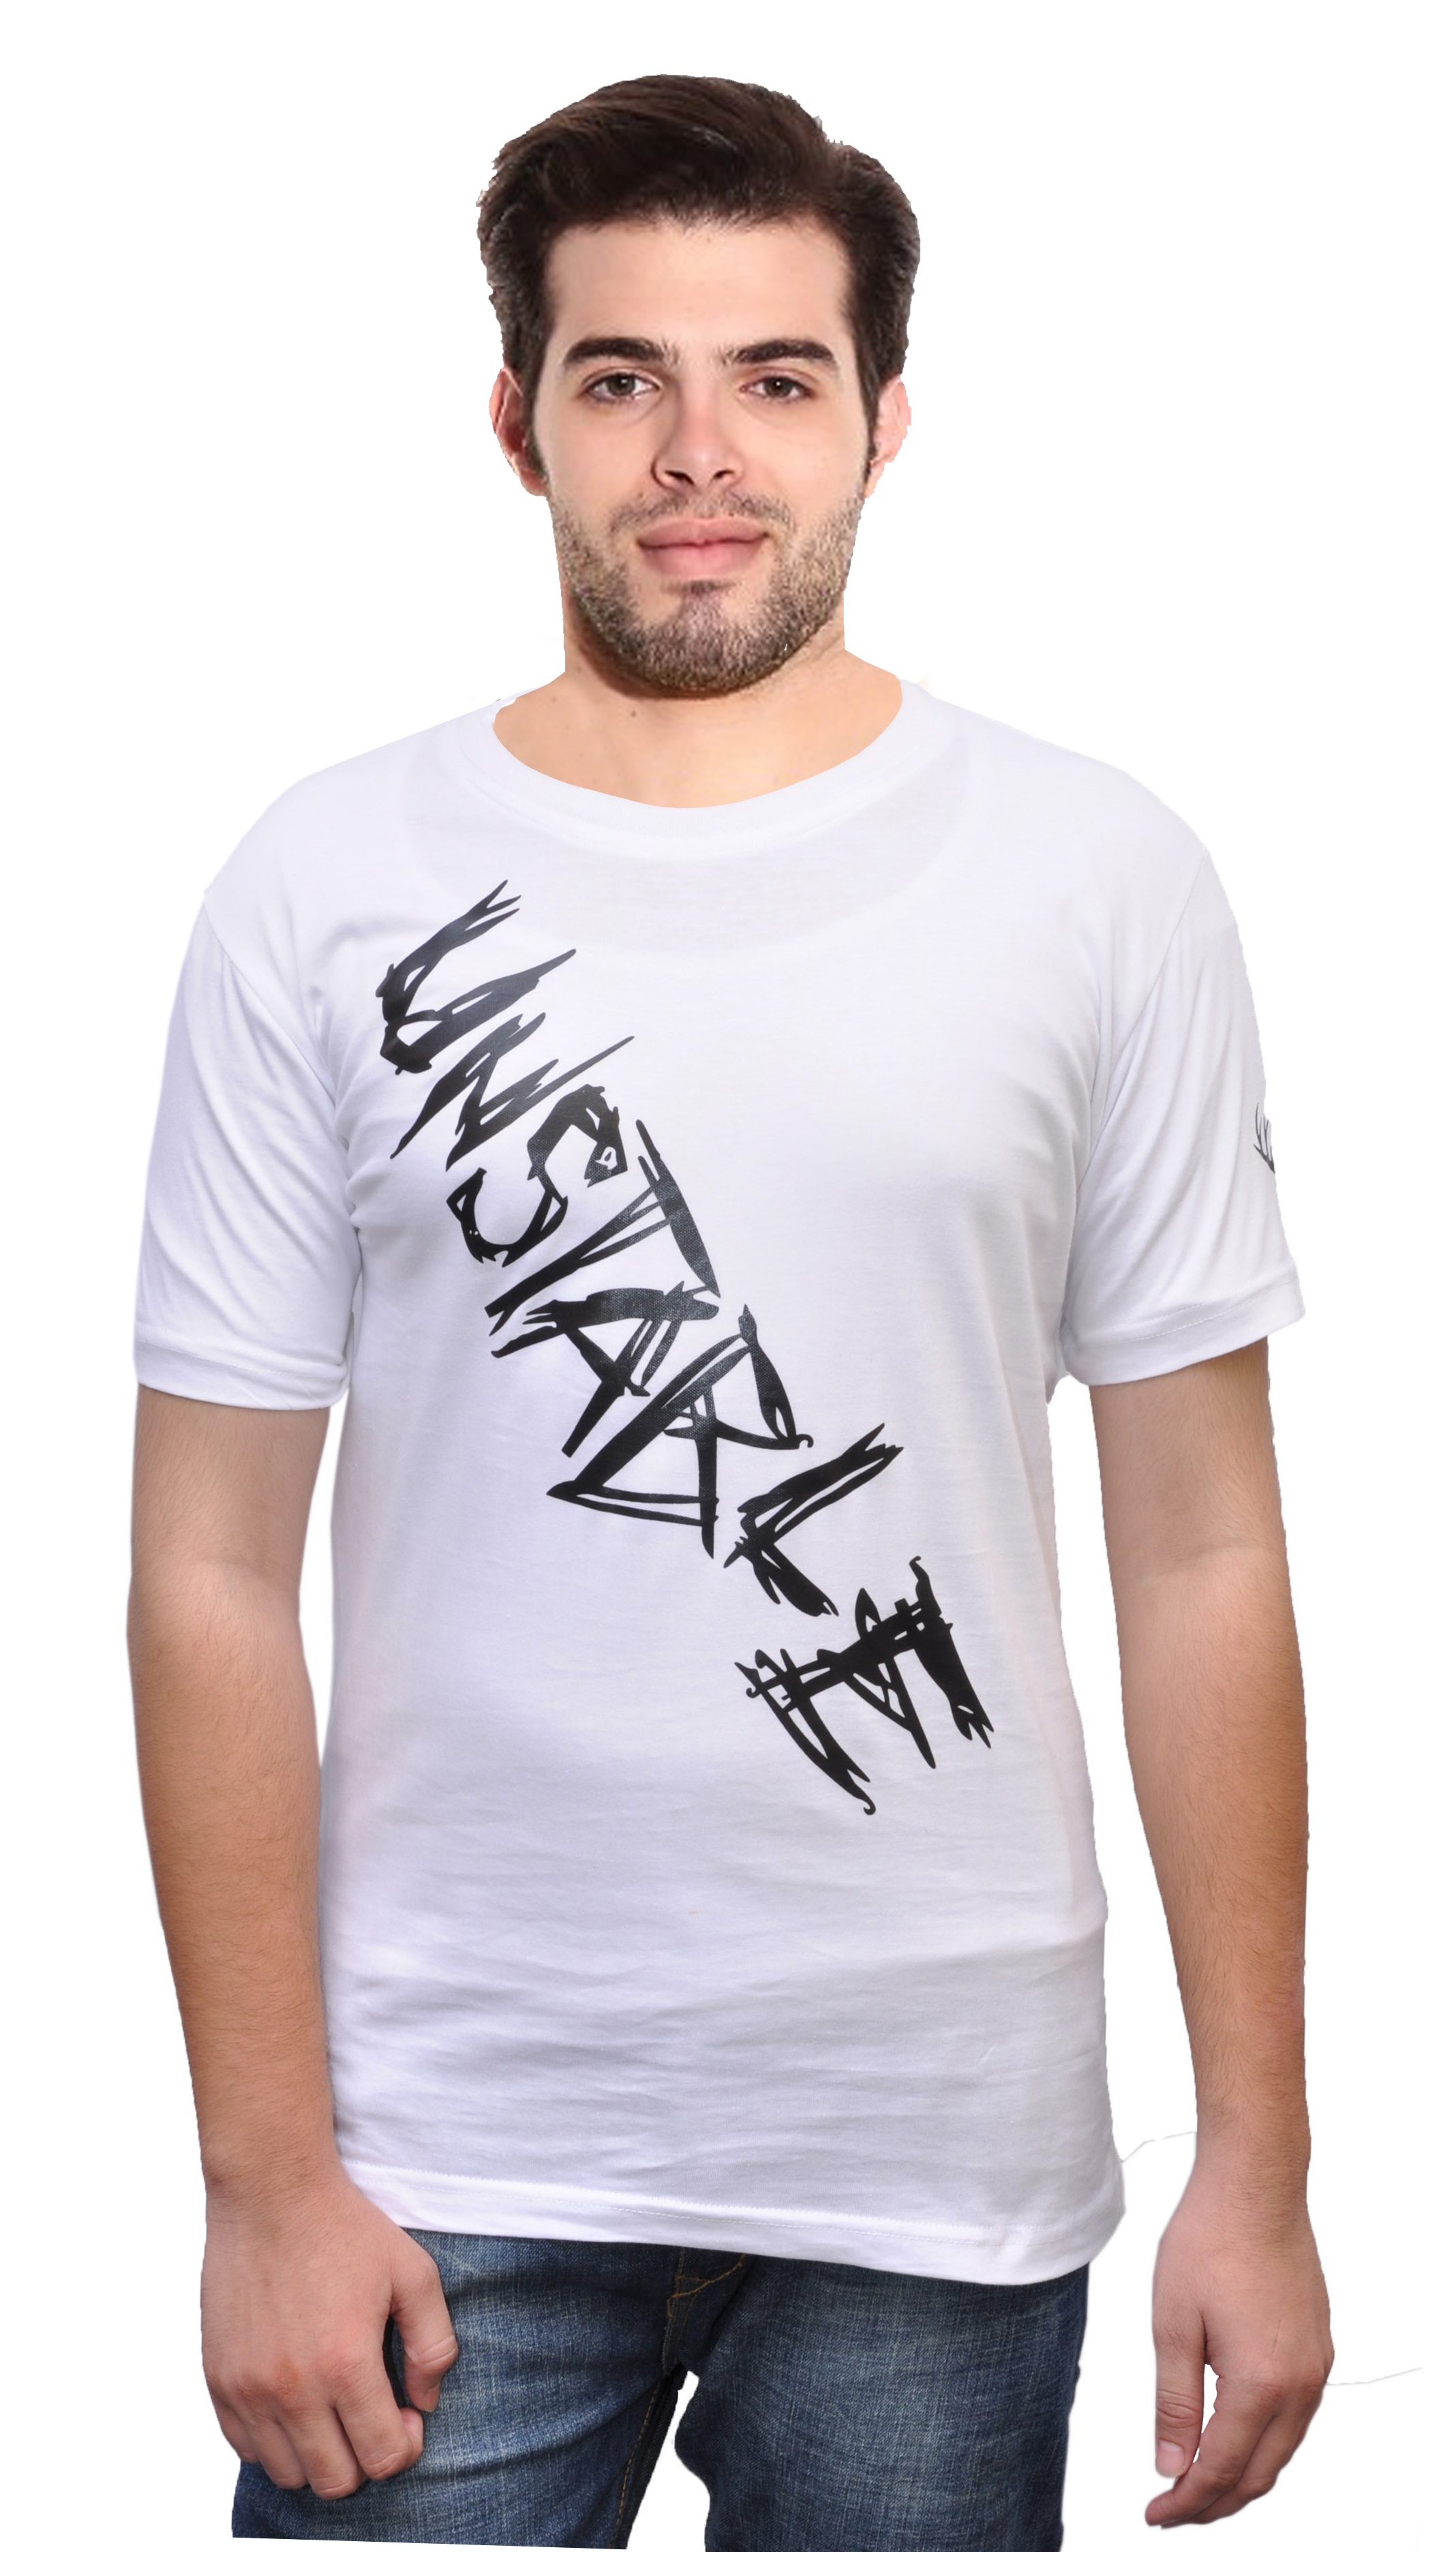 Buy Rangifer Attitude Dean Ambrose Unstable Tshirt FM125 Online @ ₹1199 ...